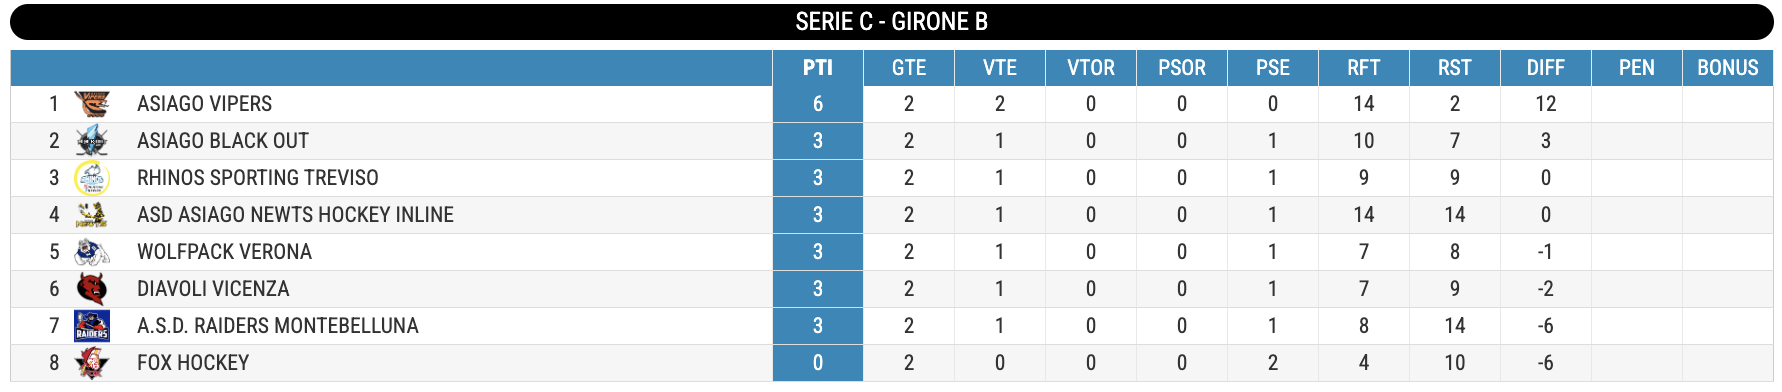 Classifica Serie C